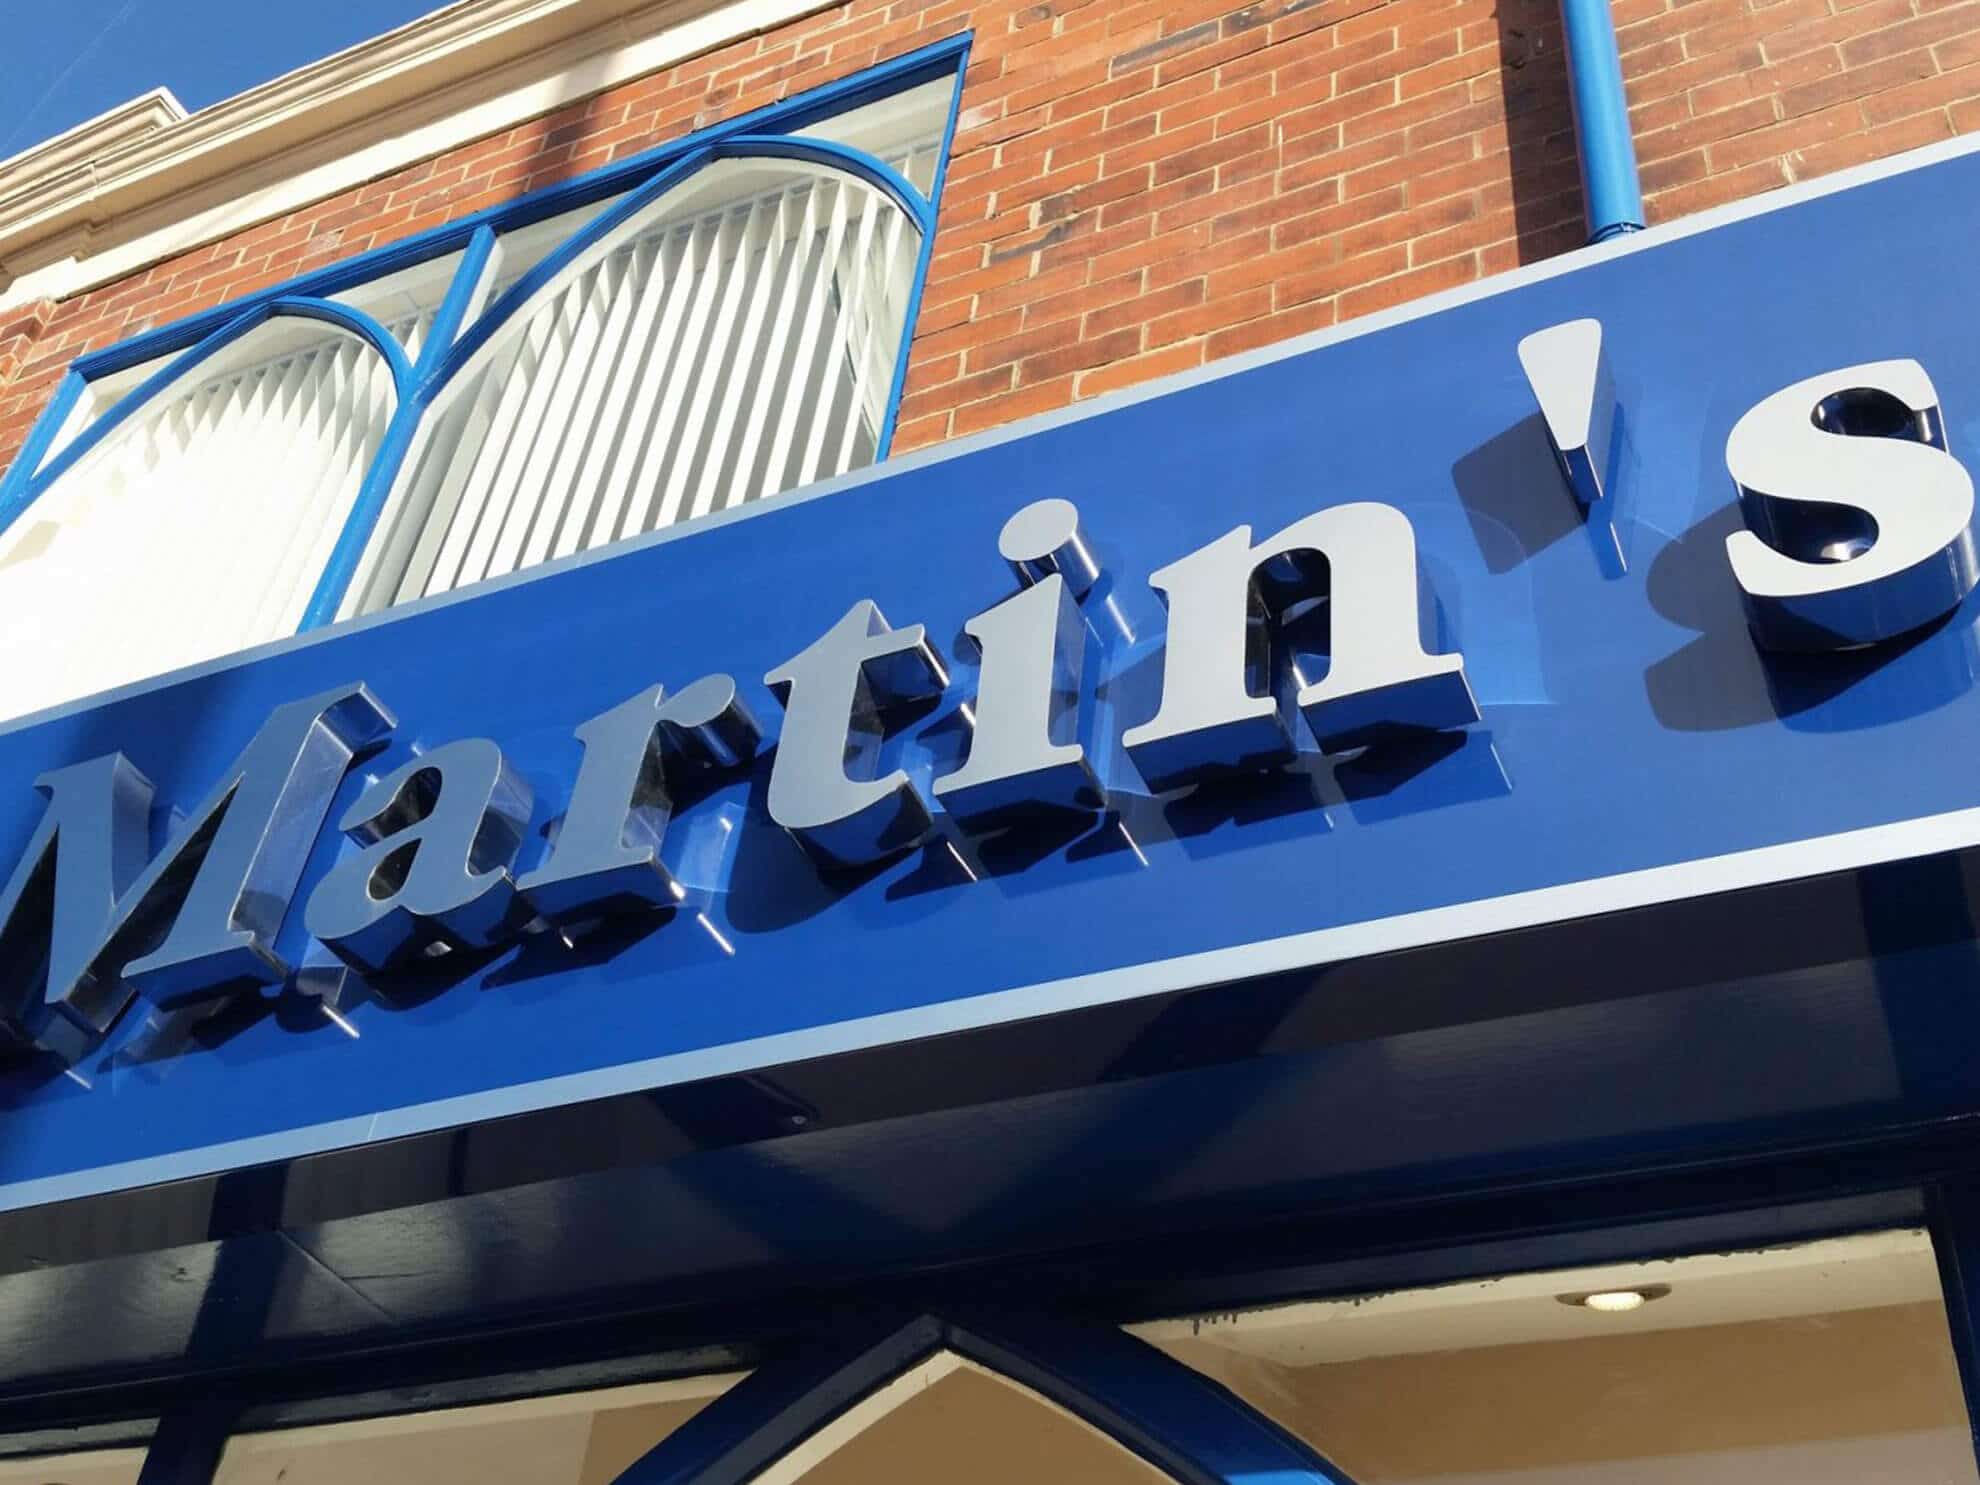 Martim's sign - 3D polished stainless steel built up letters